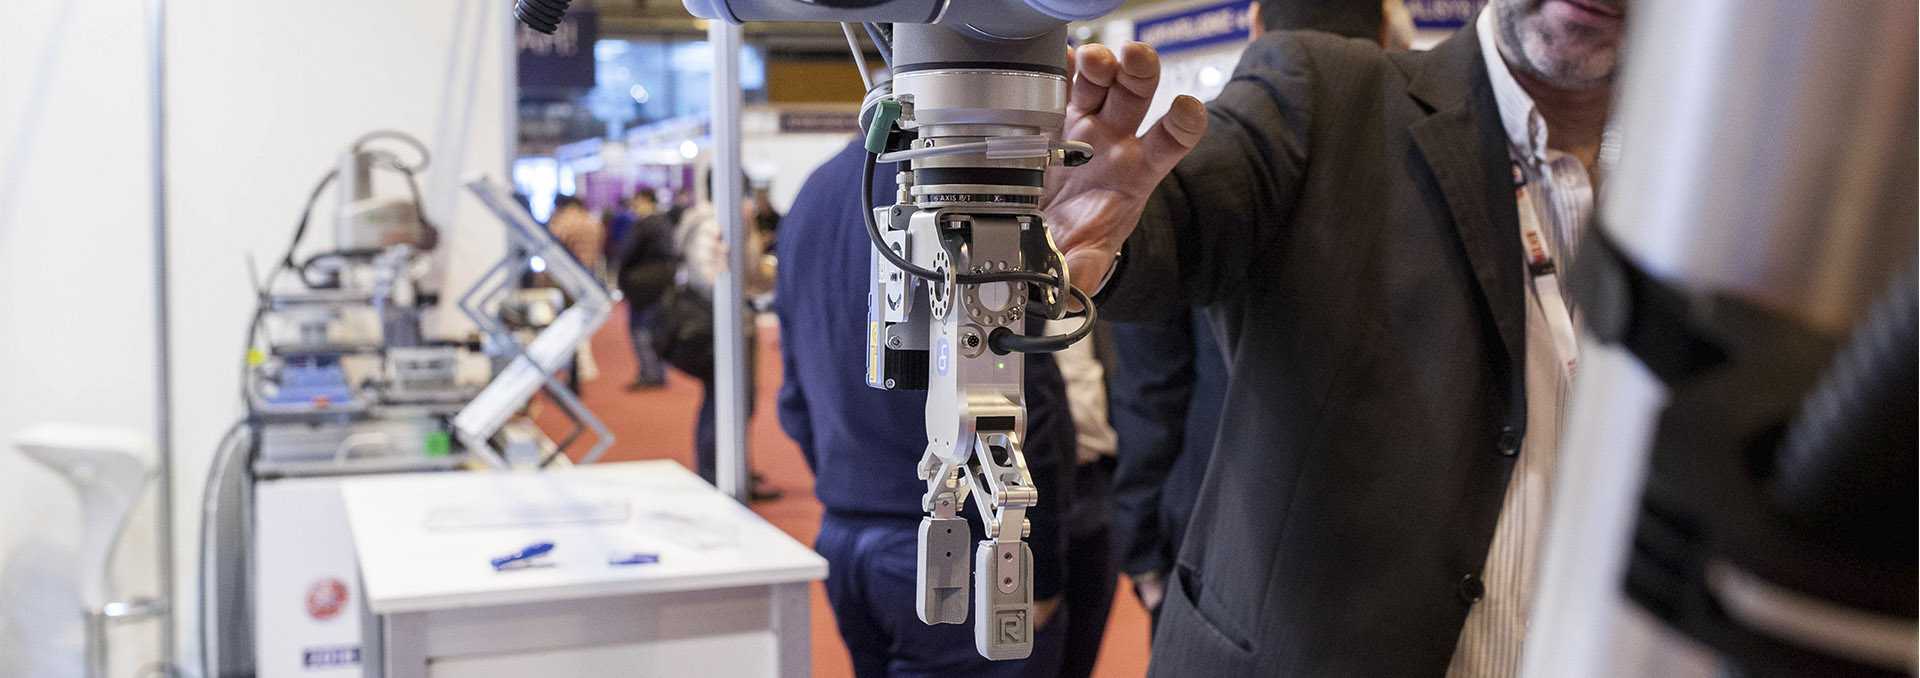 Global Robot Expo 2019